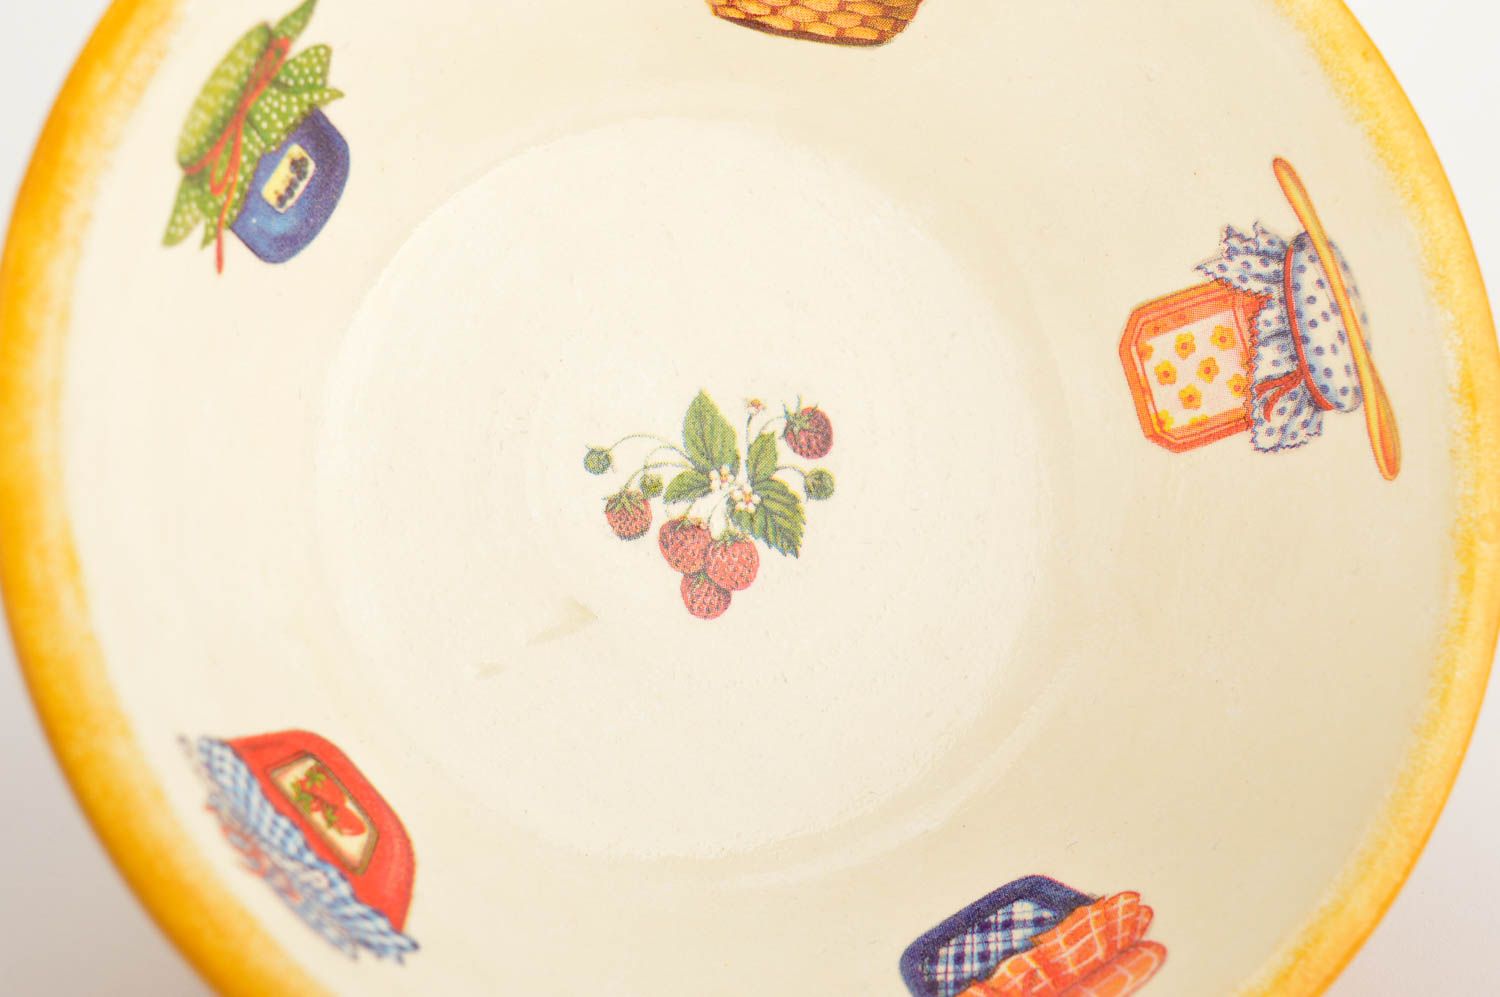 Plato de madera pintado plato artesanal vajilla moderna decoración de cocina foto 2